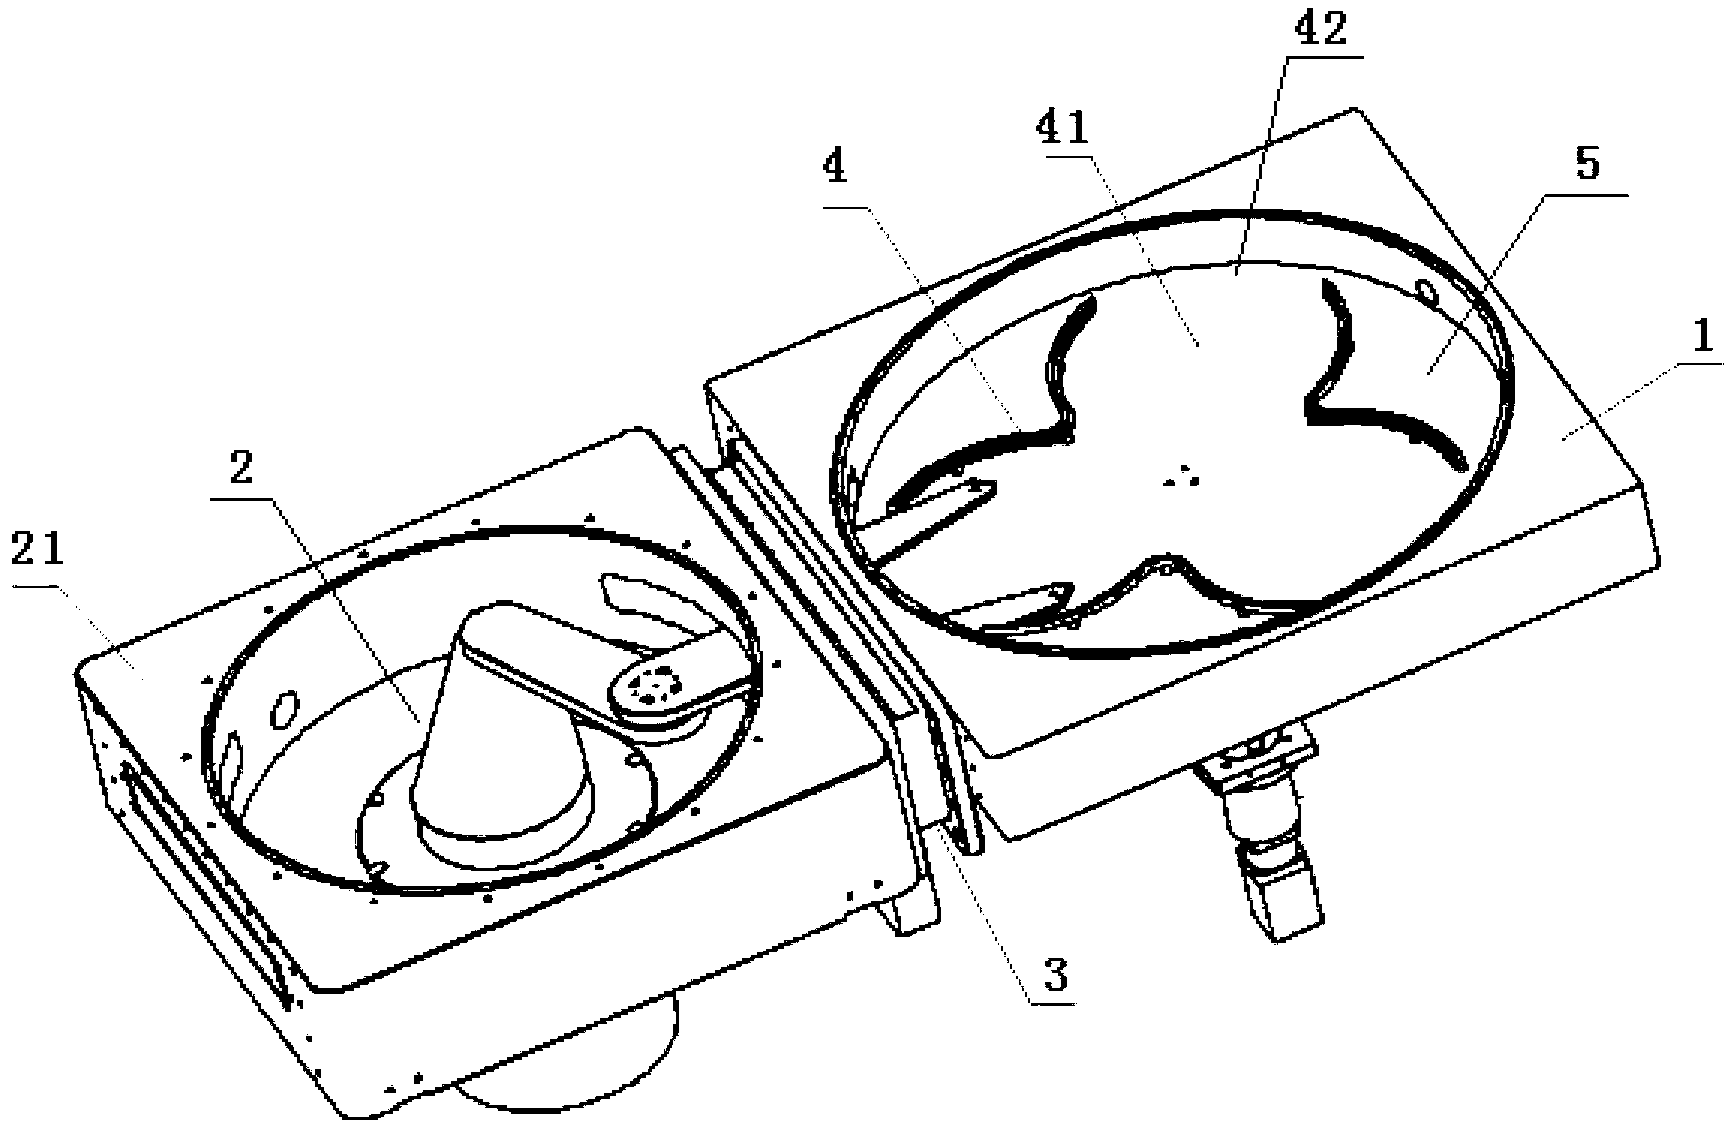 Film spool conveying system of plasma etcher